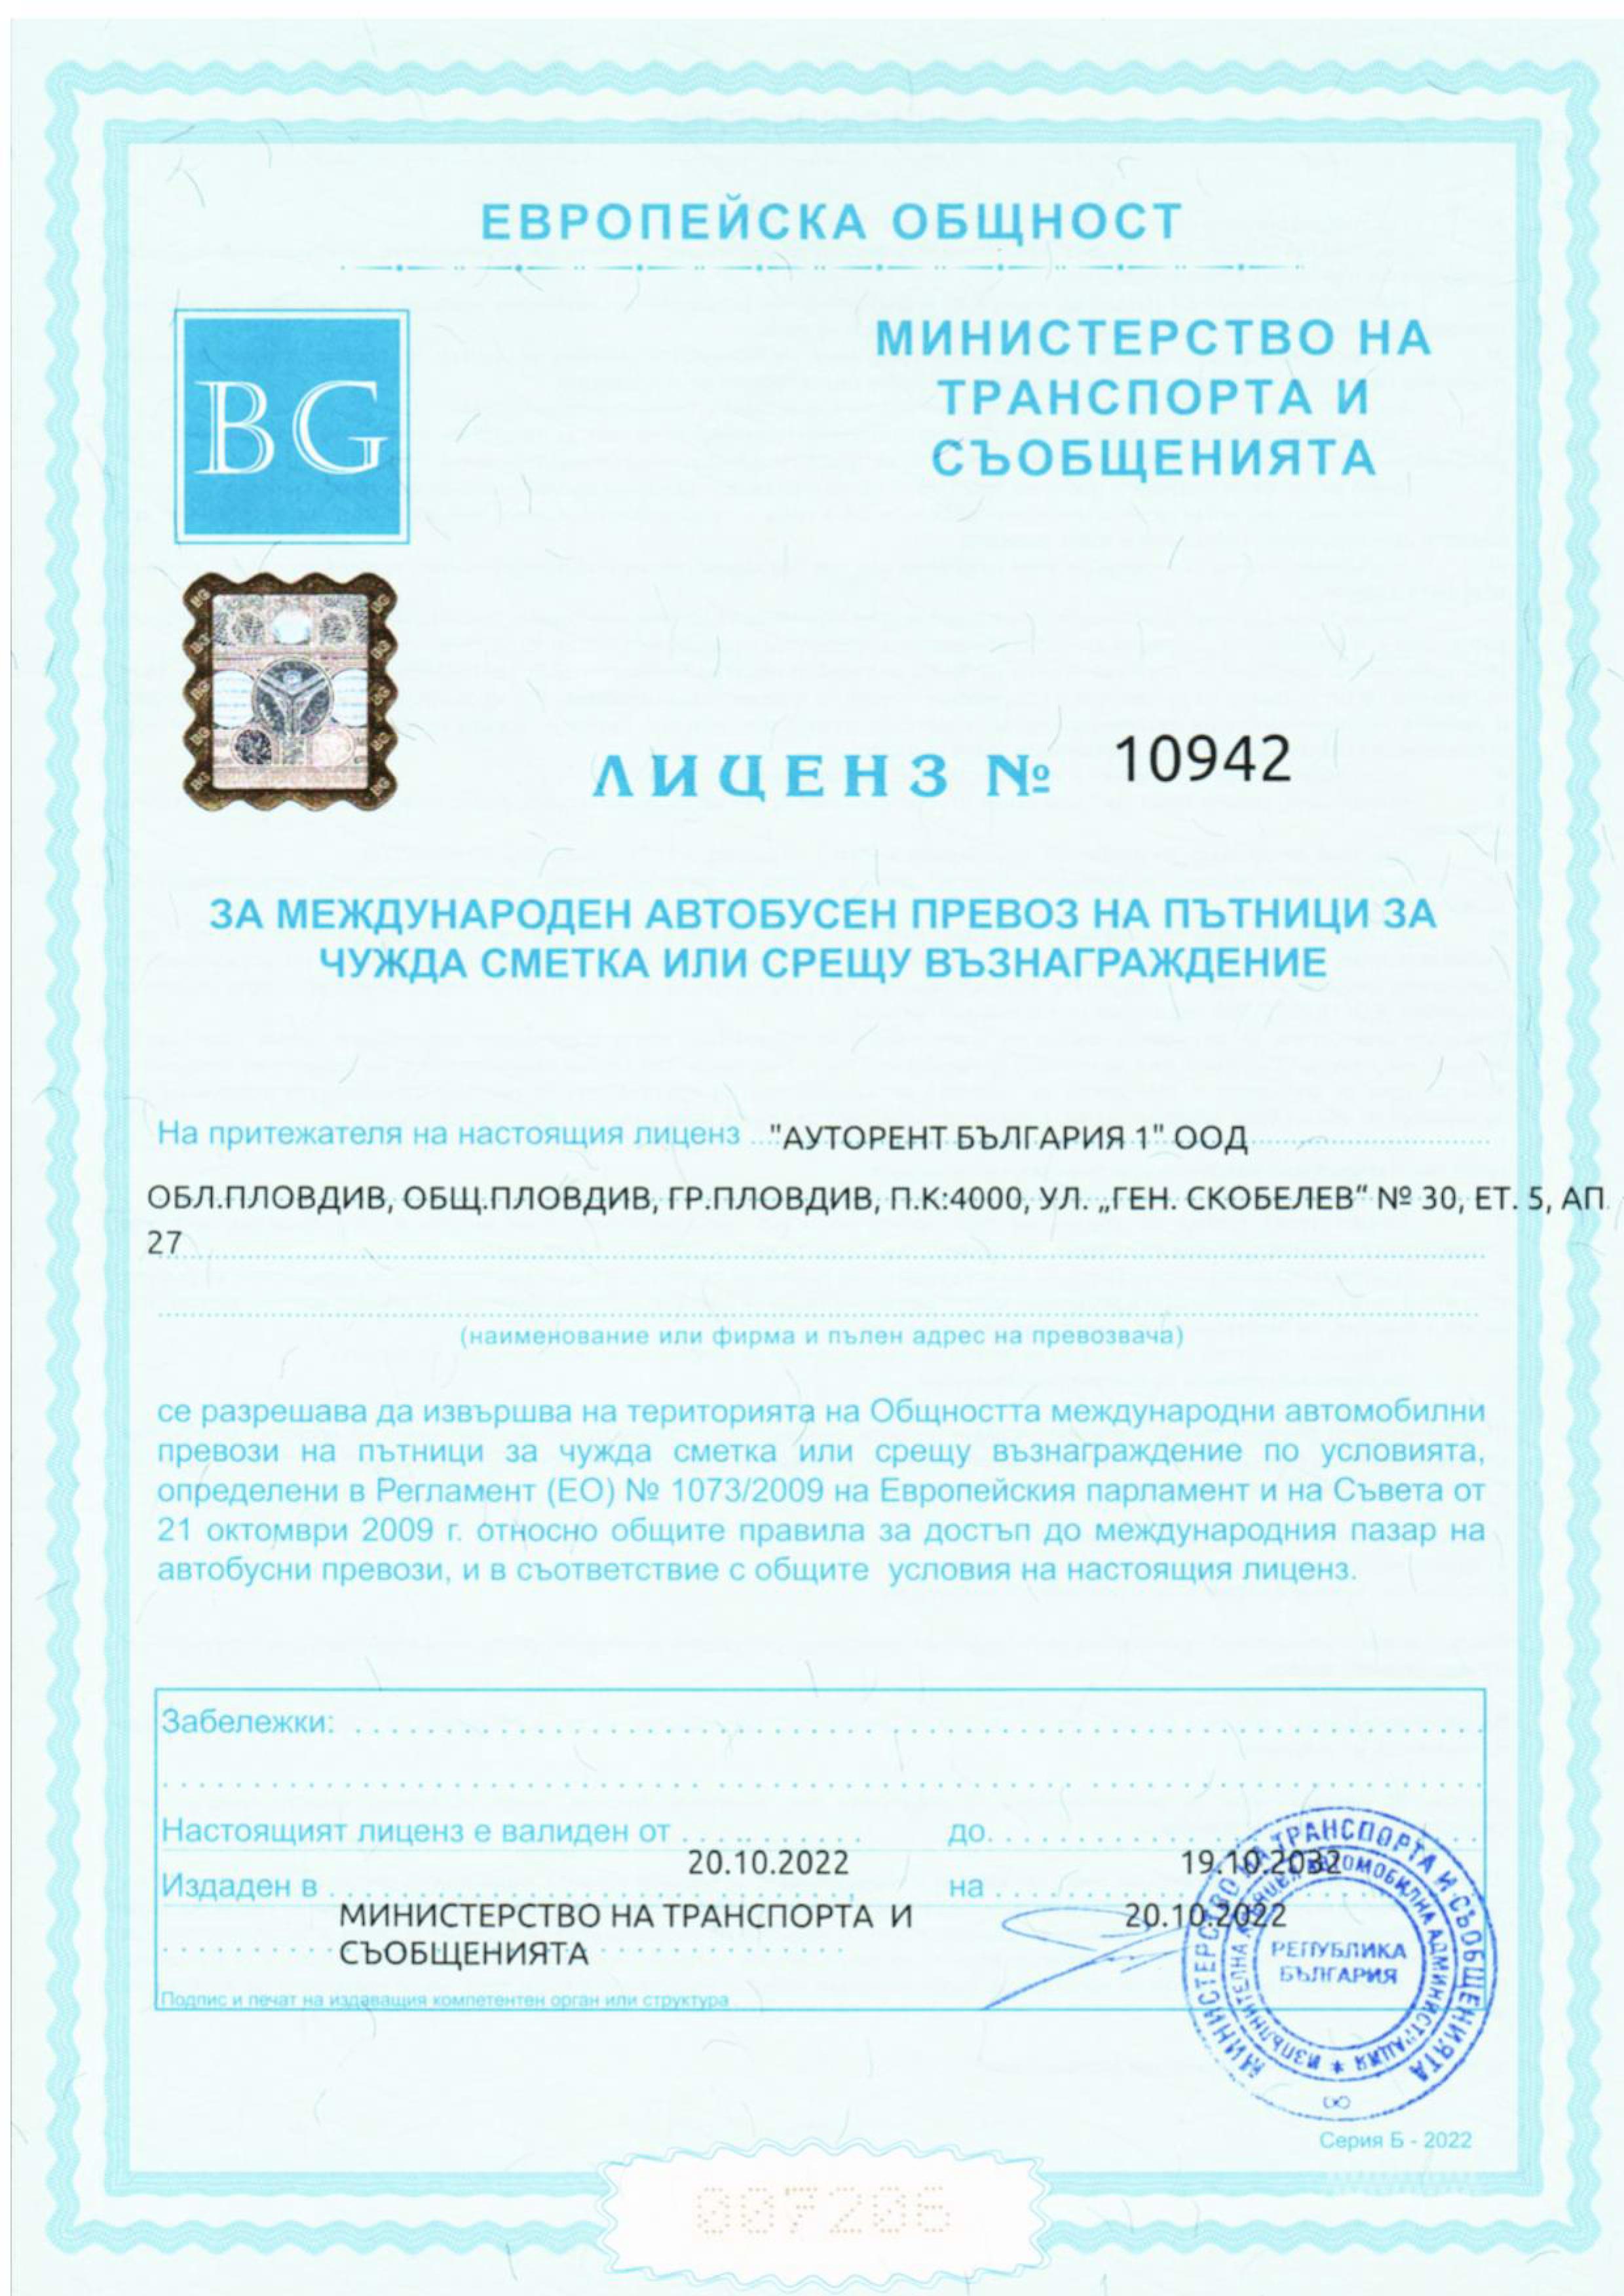 Official Transport License